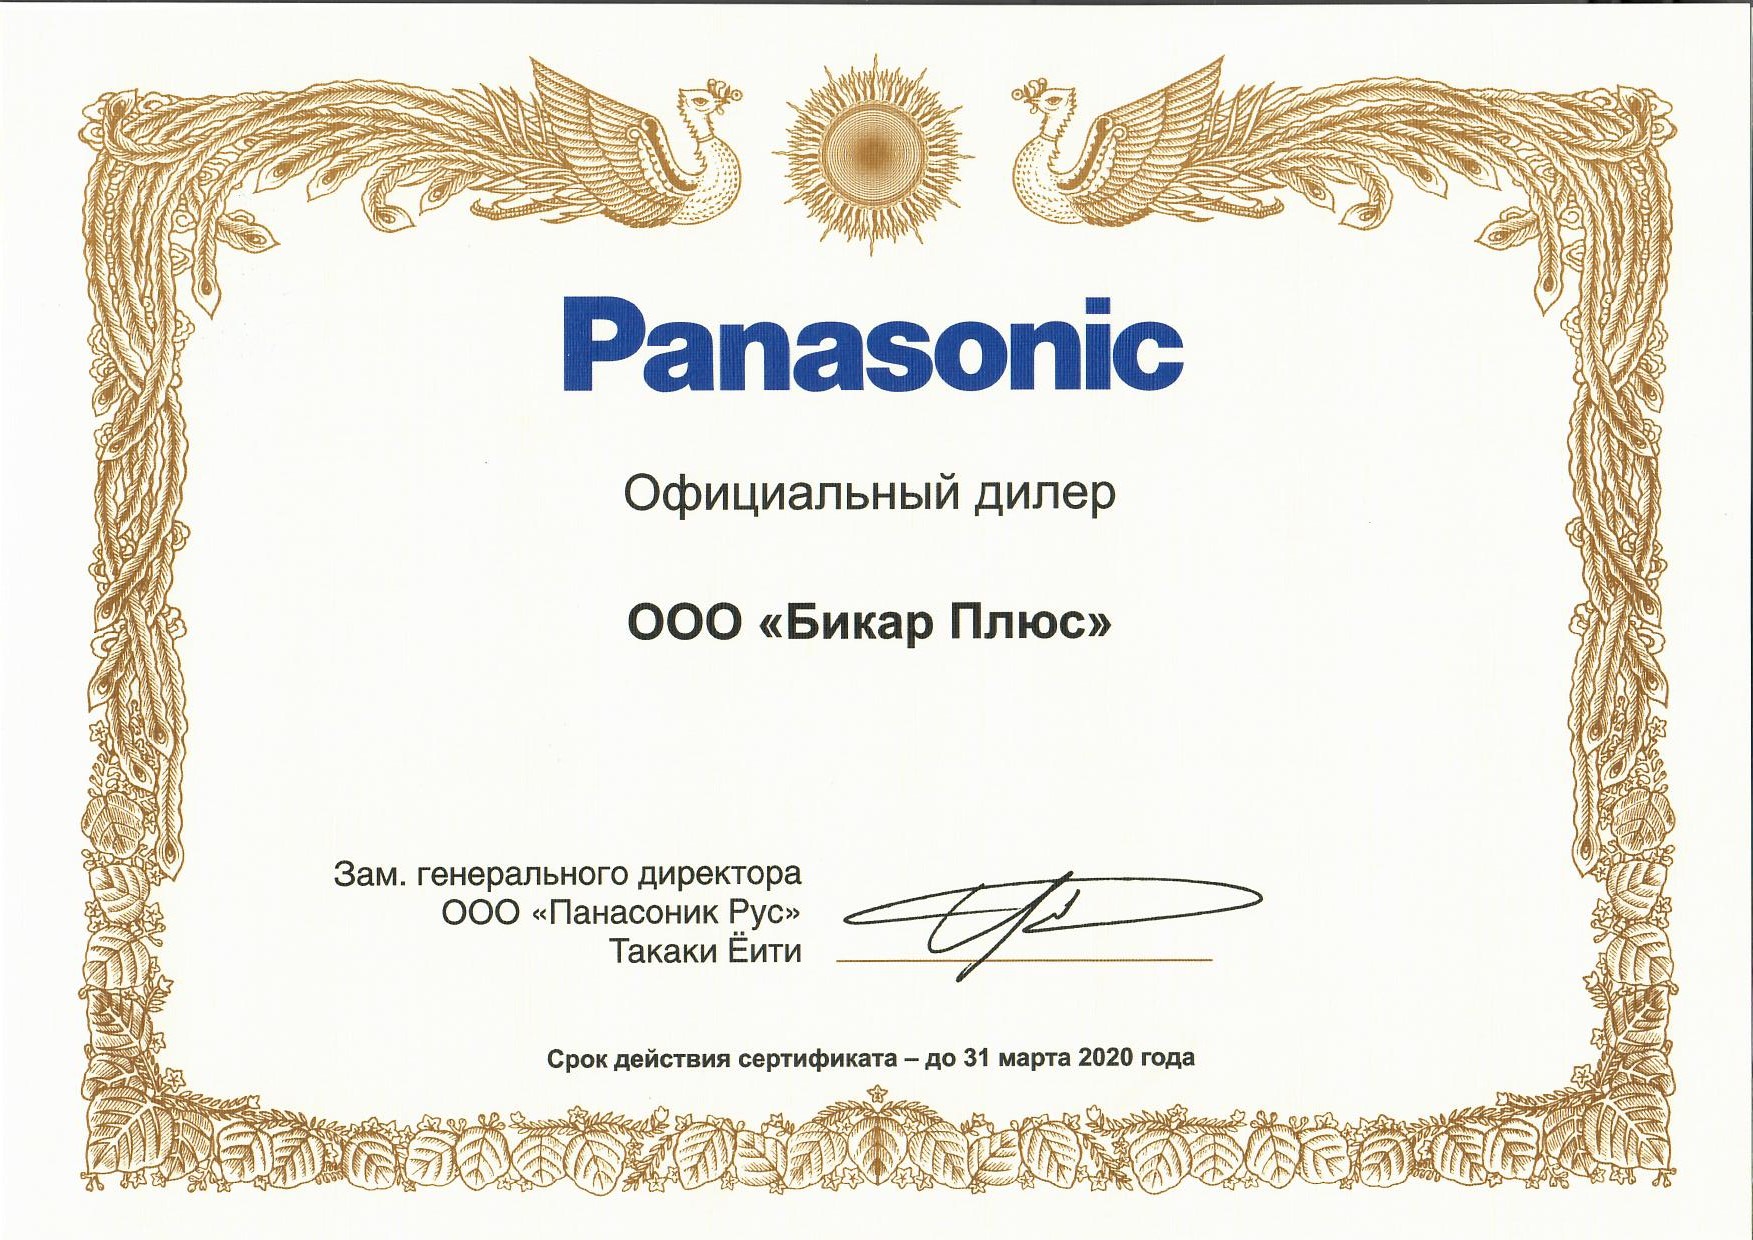 Cертификат официального дилера Panasonic Бикар Плюс